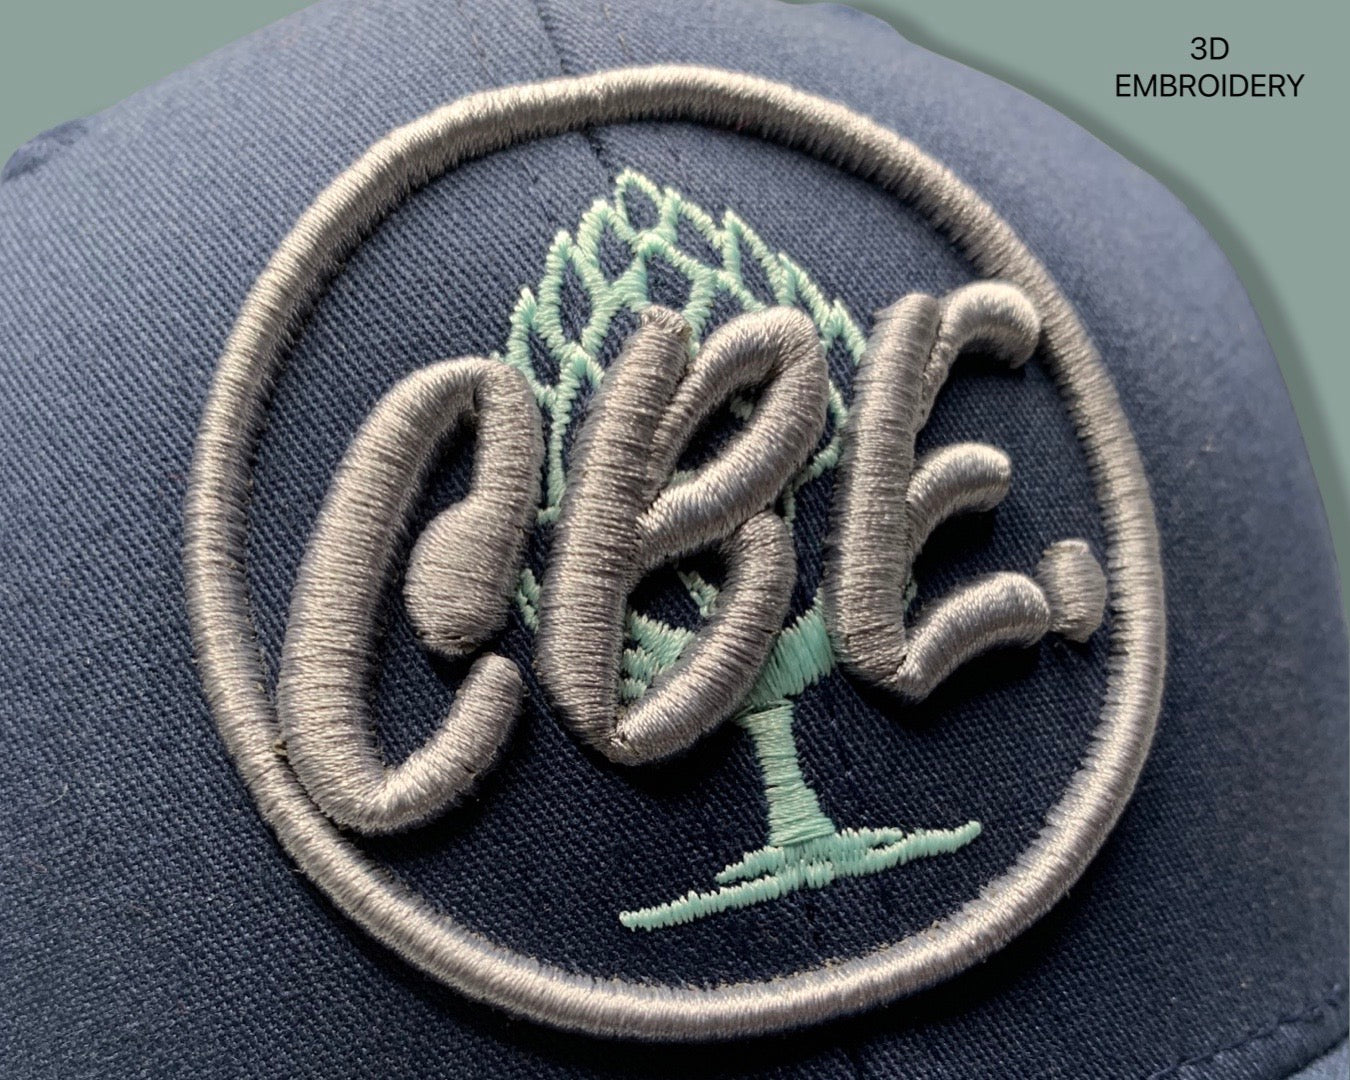 The CBE Hat